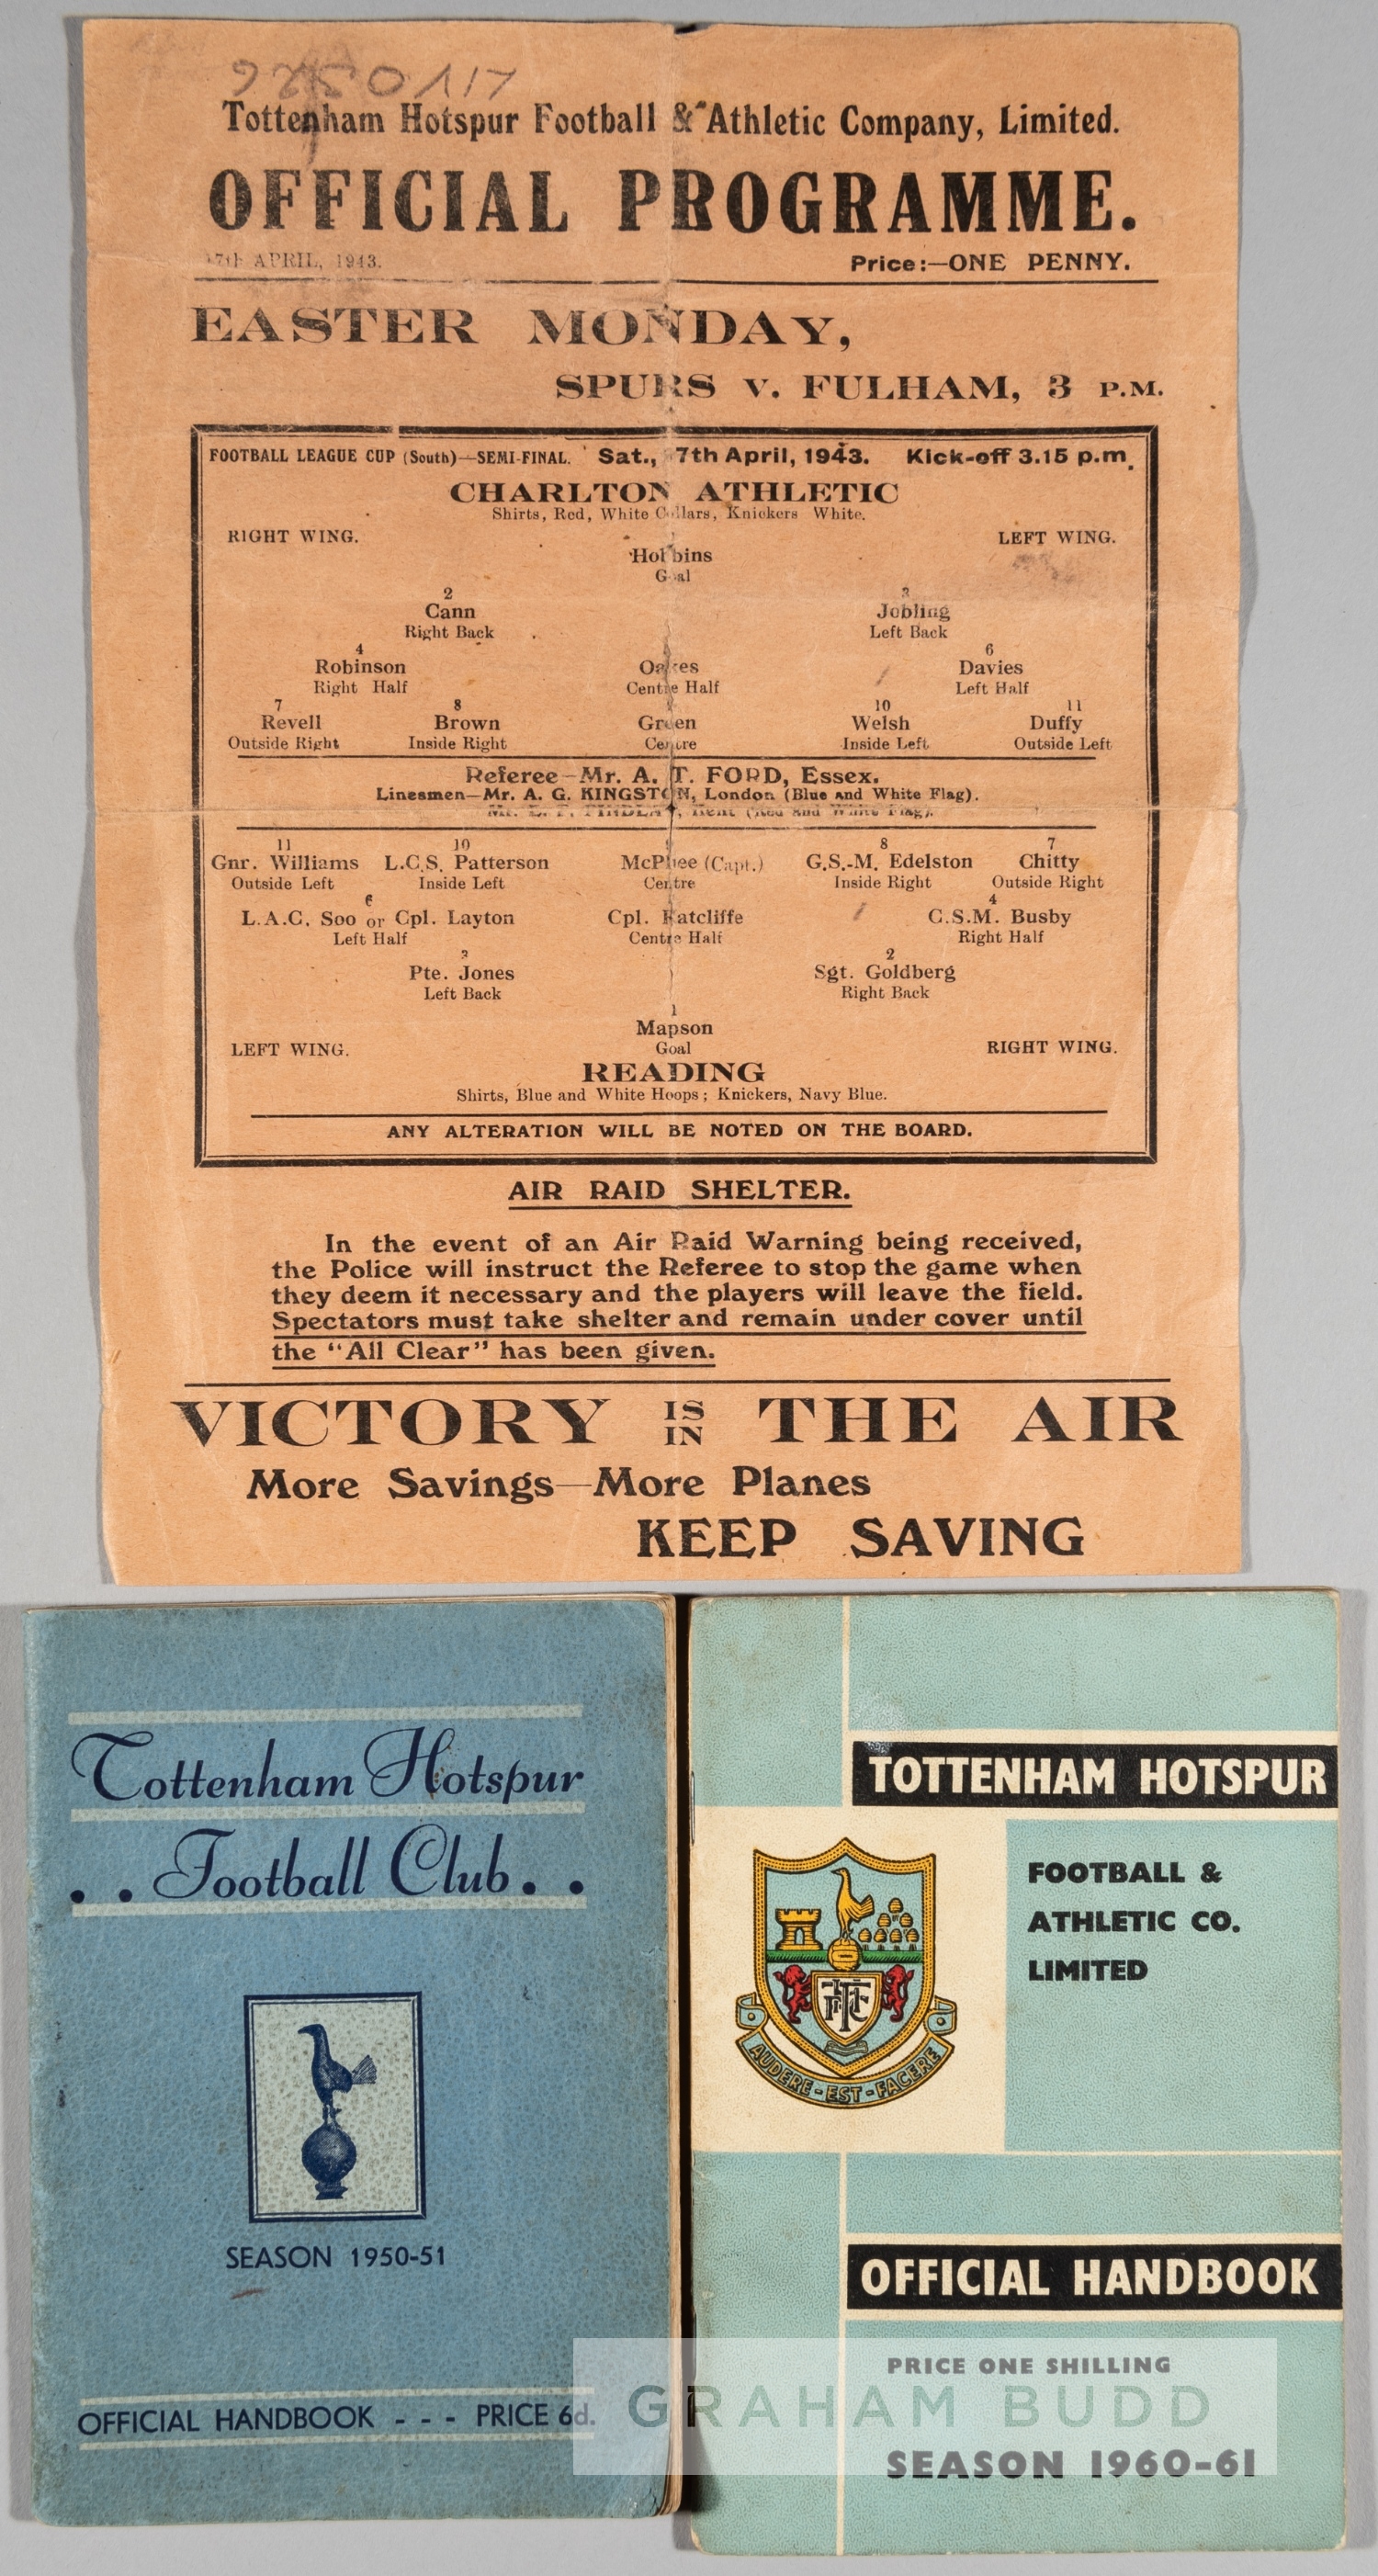 44 Tottenham Hotspur home programmes, Charlton v Reading (War Cup Semi-final) at White Hart Lane